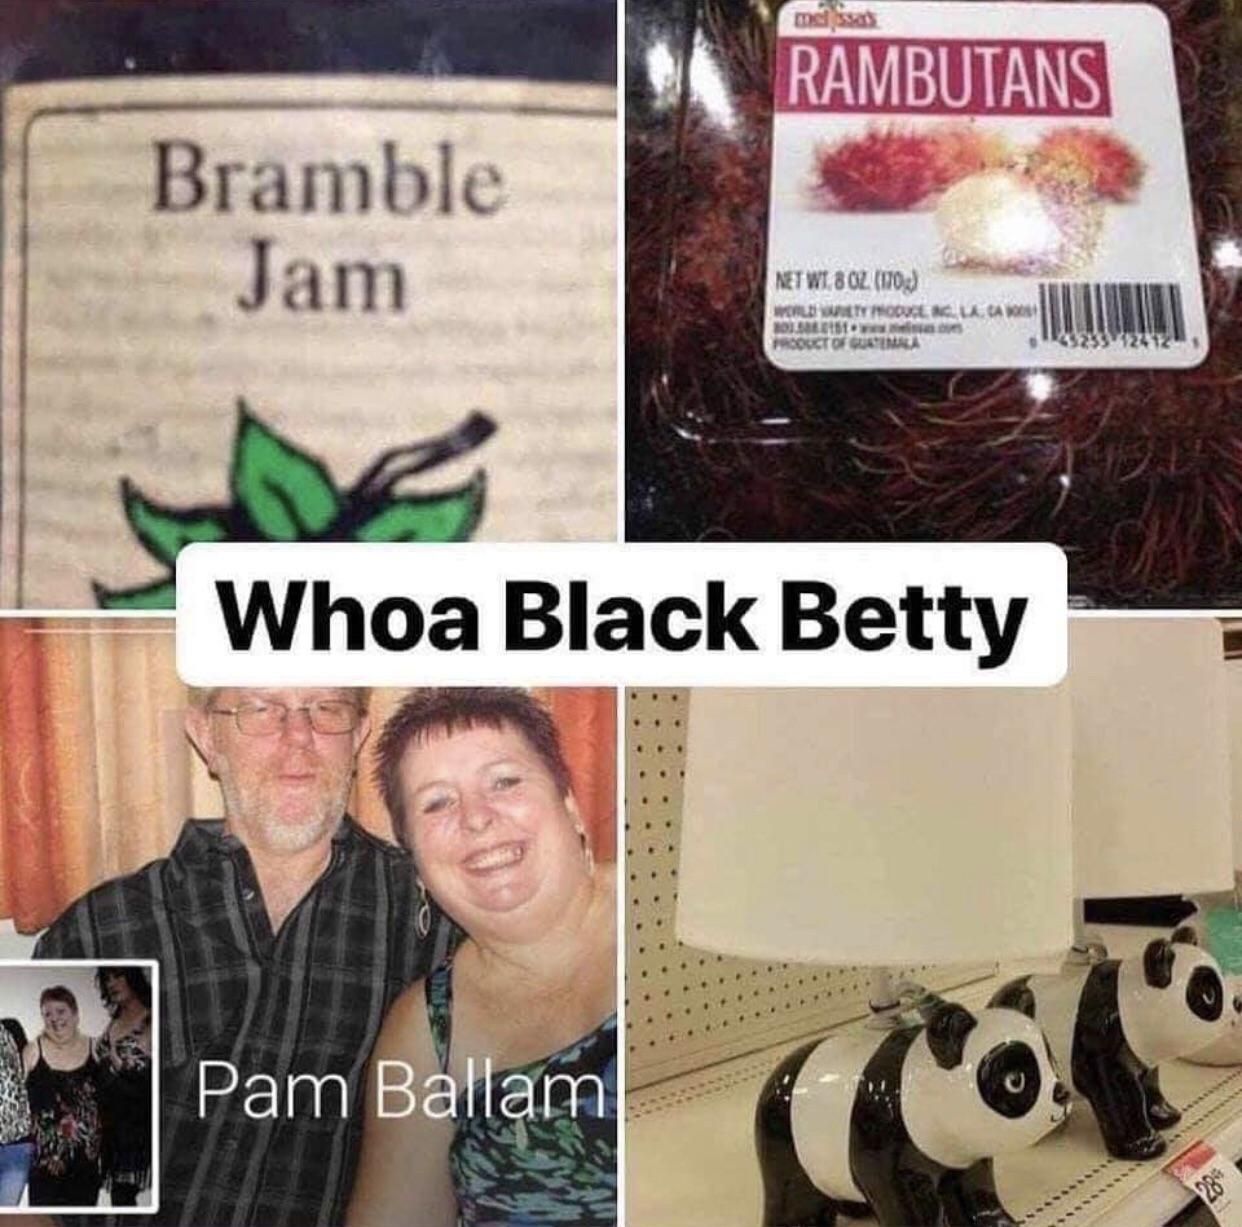 Bramble jam